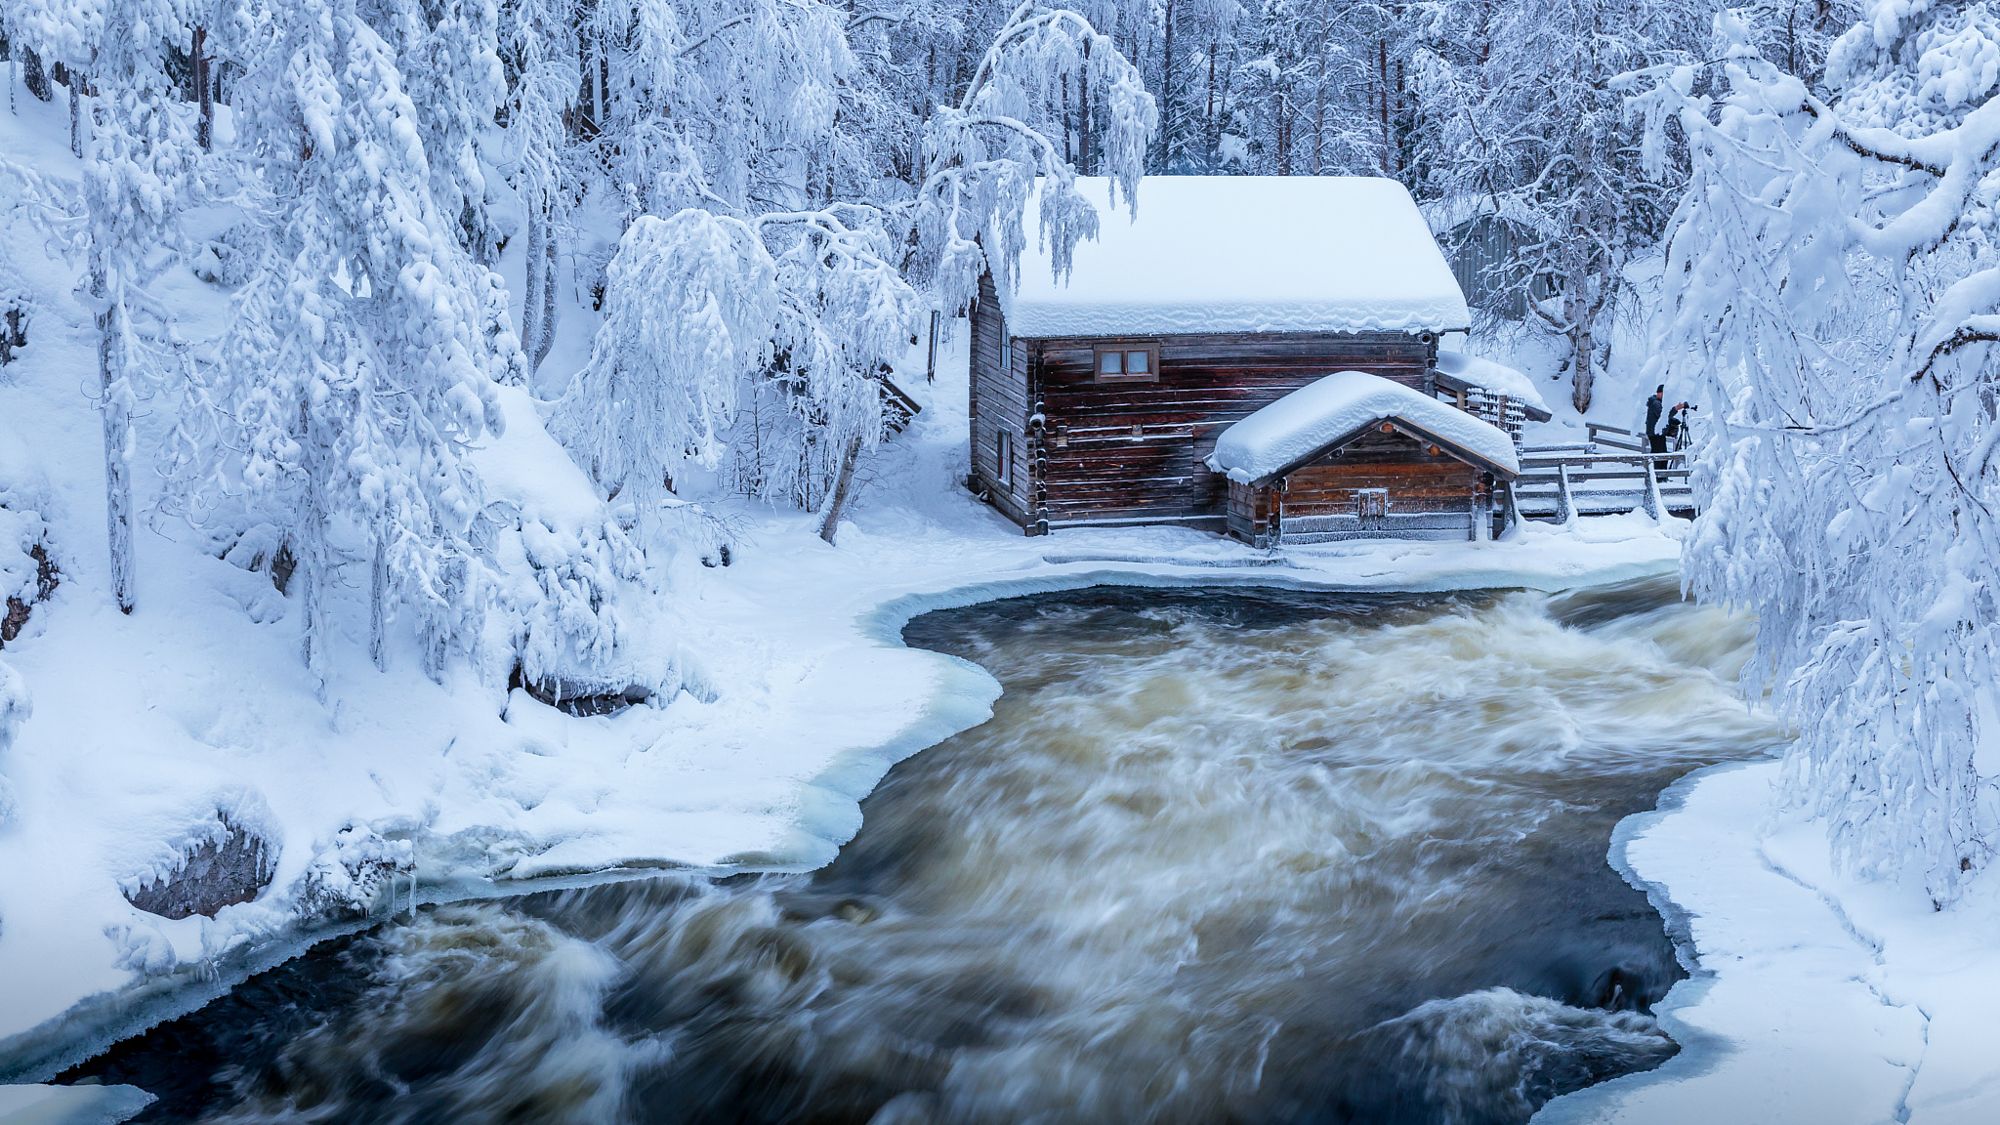 Cabin on Winter River by Jari Ehrström